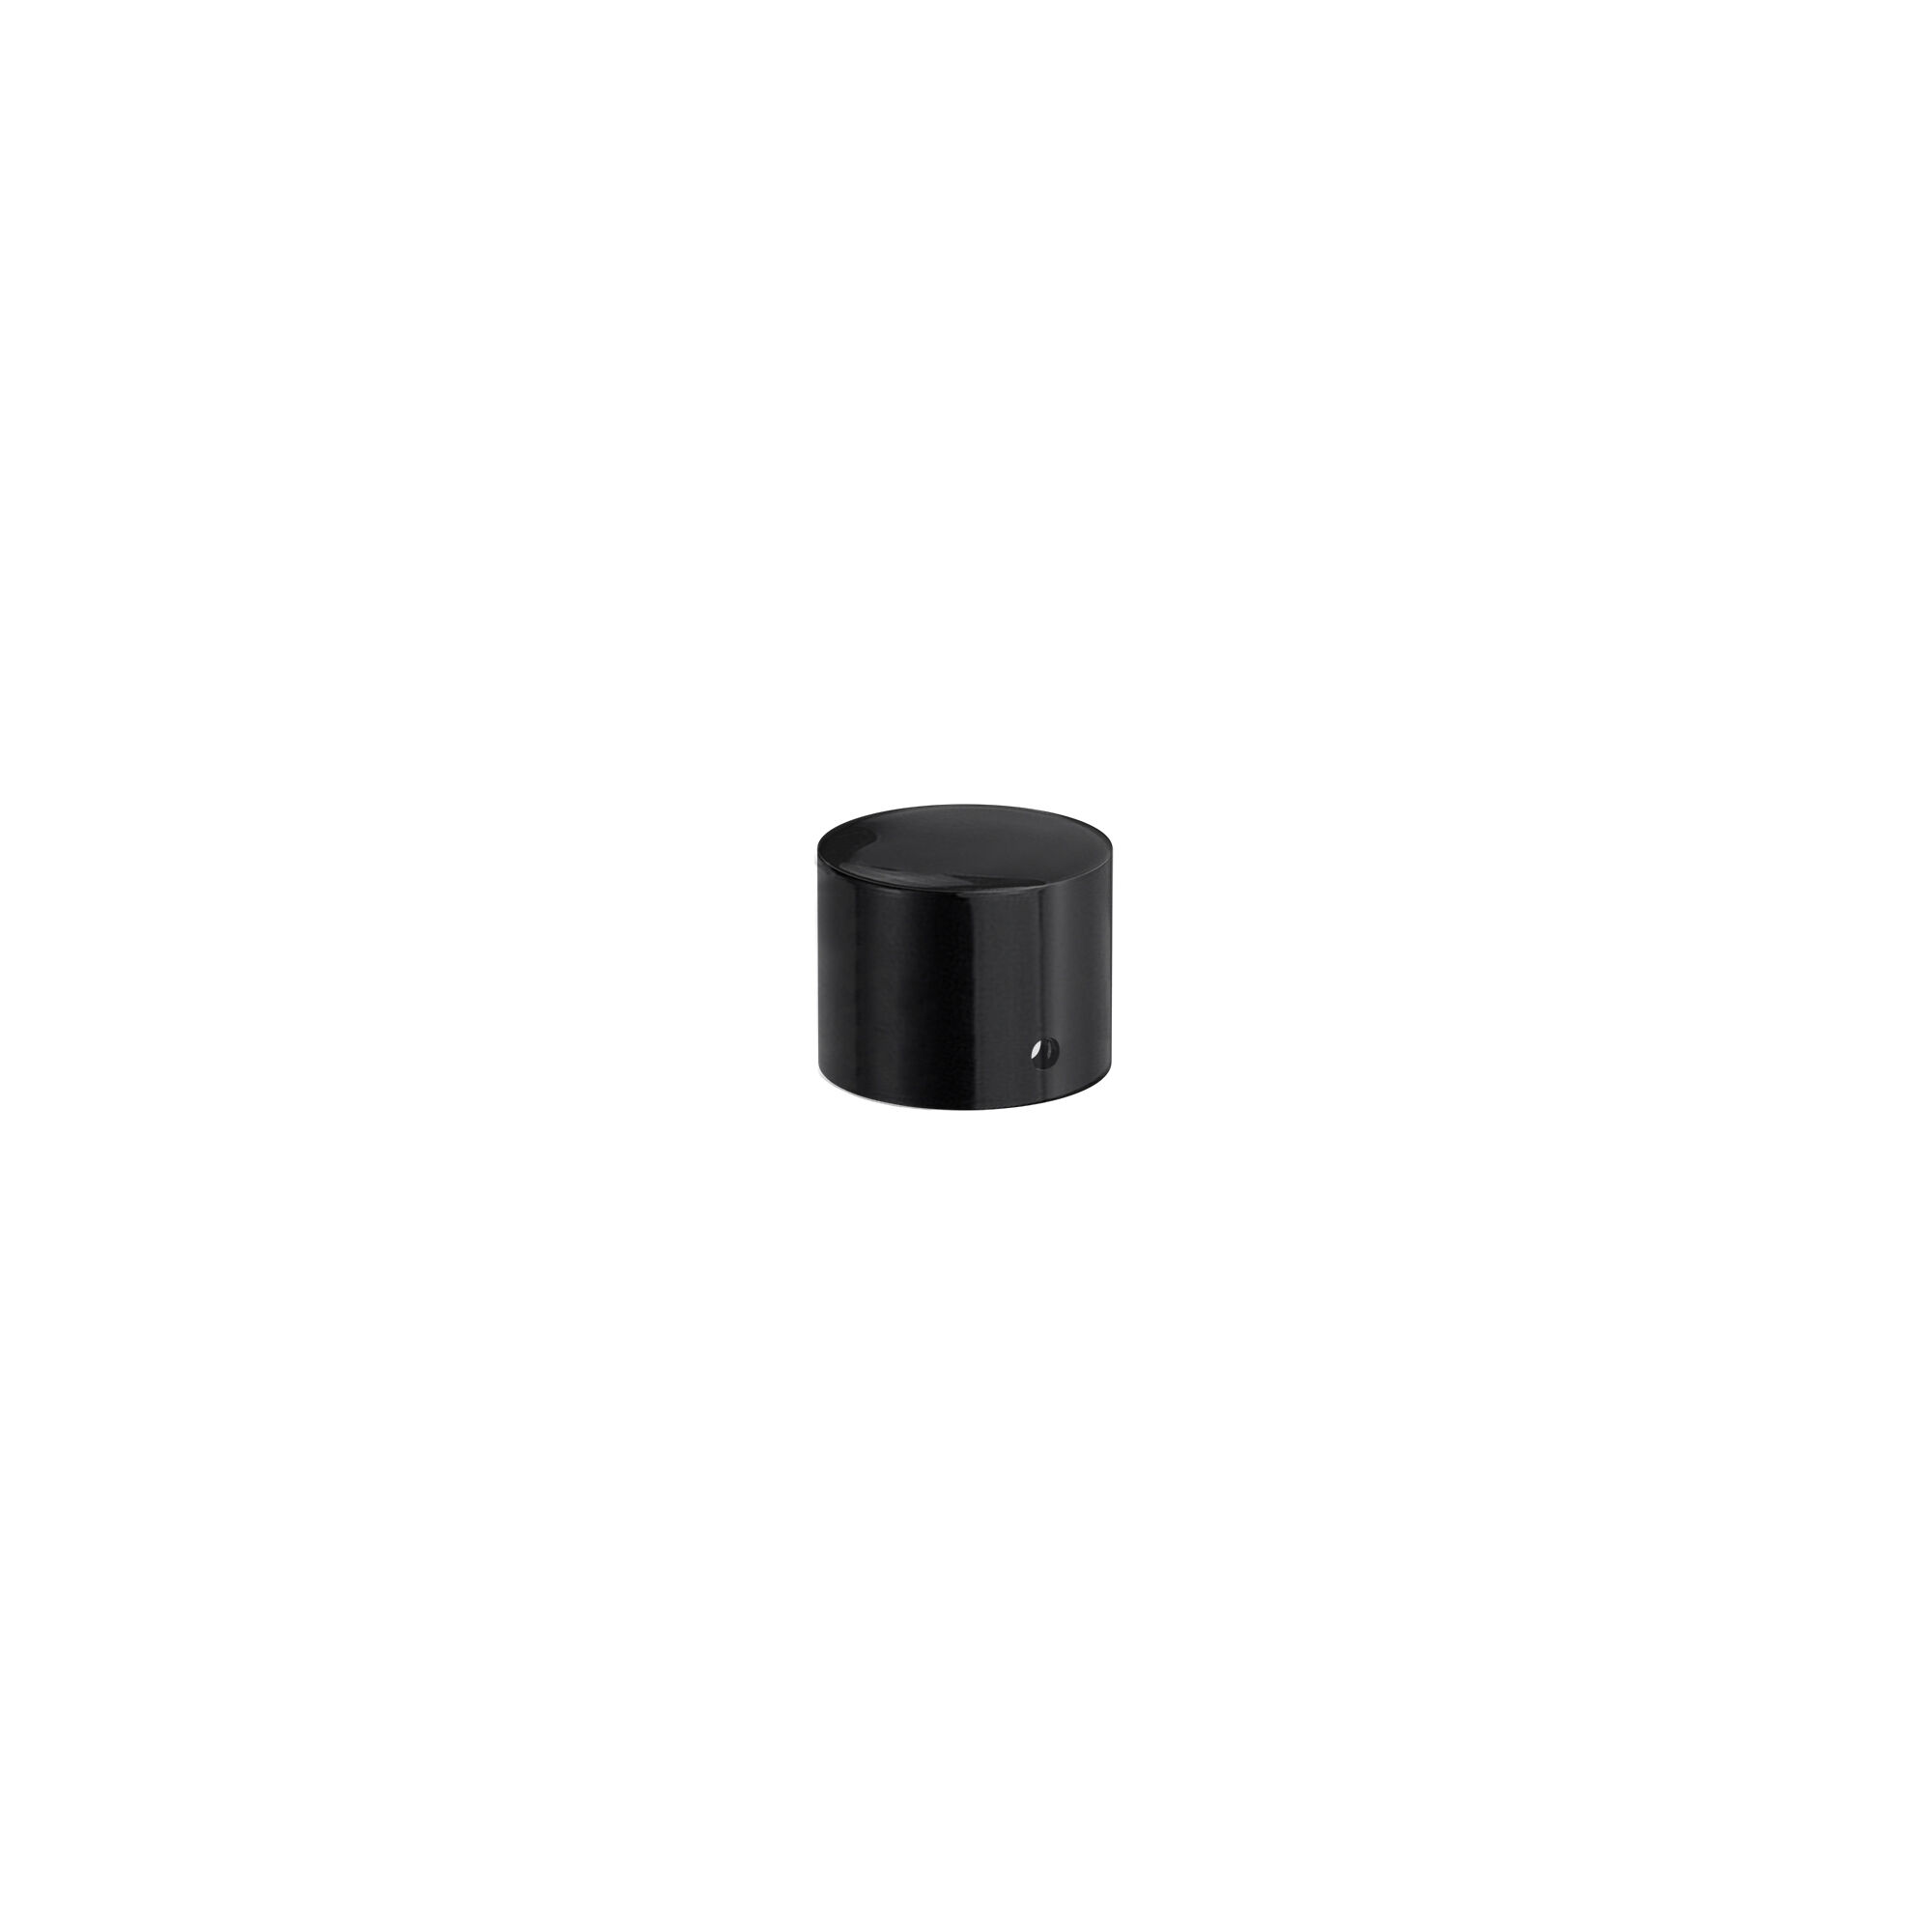 Заглушка для круглого гибкого неона Elektrostandard Full light FL 28/20, черный